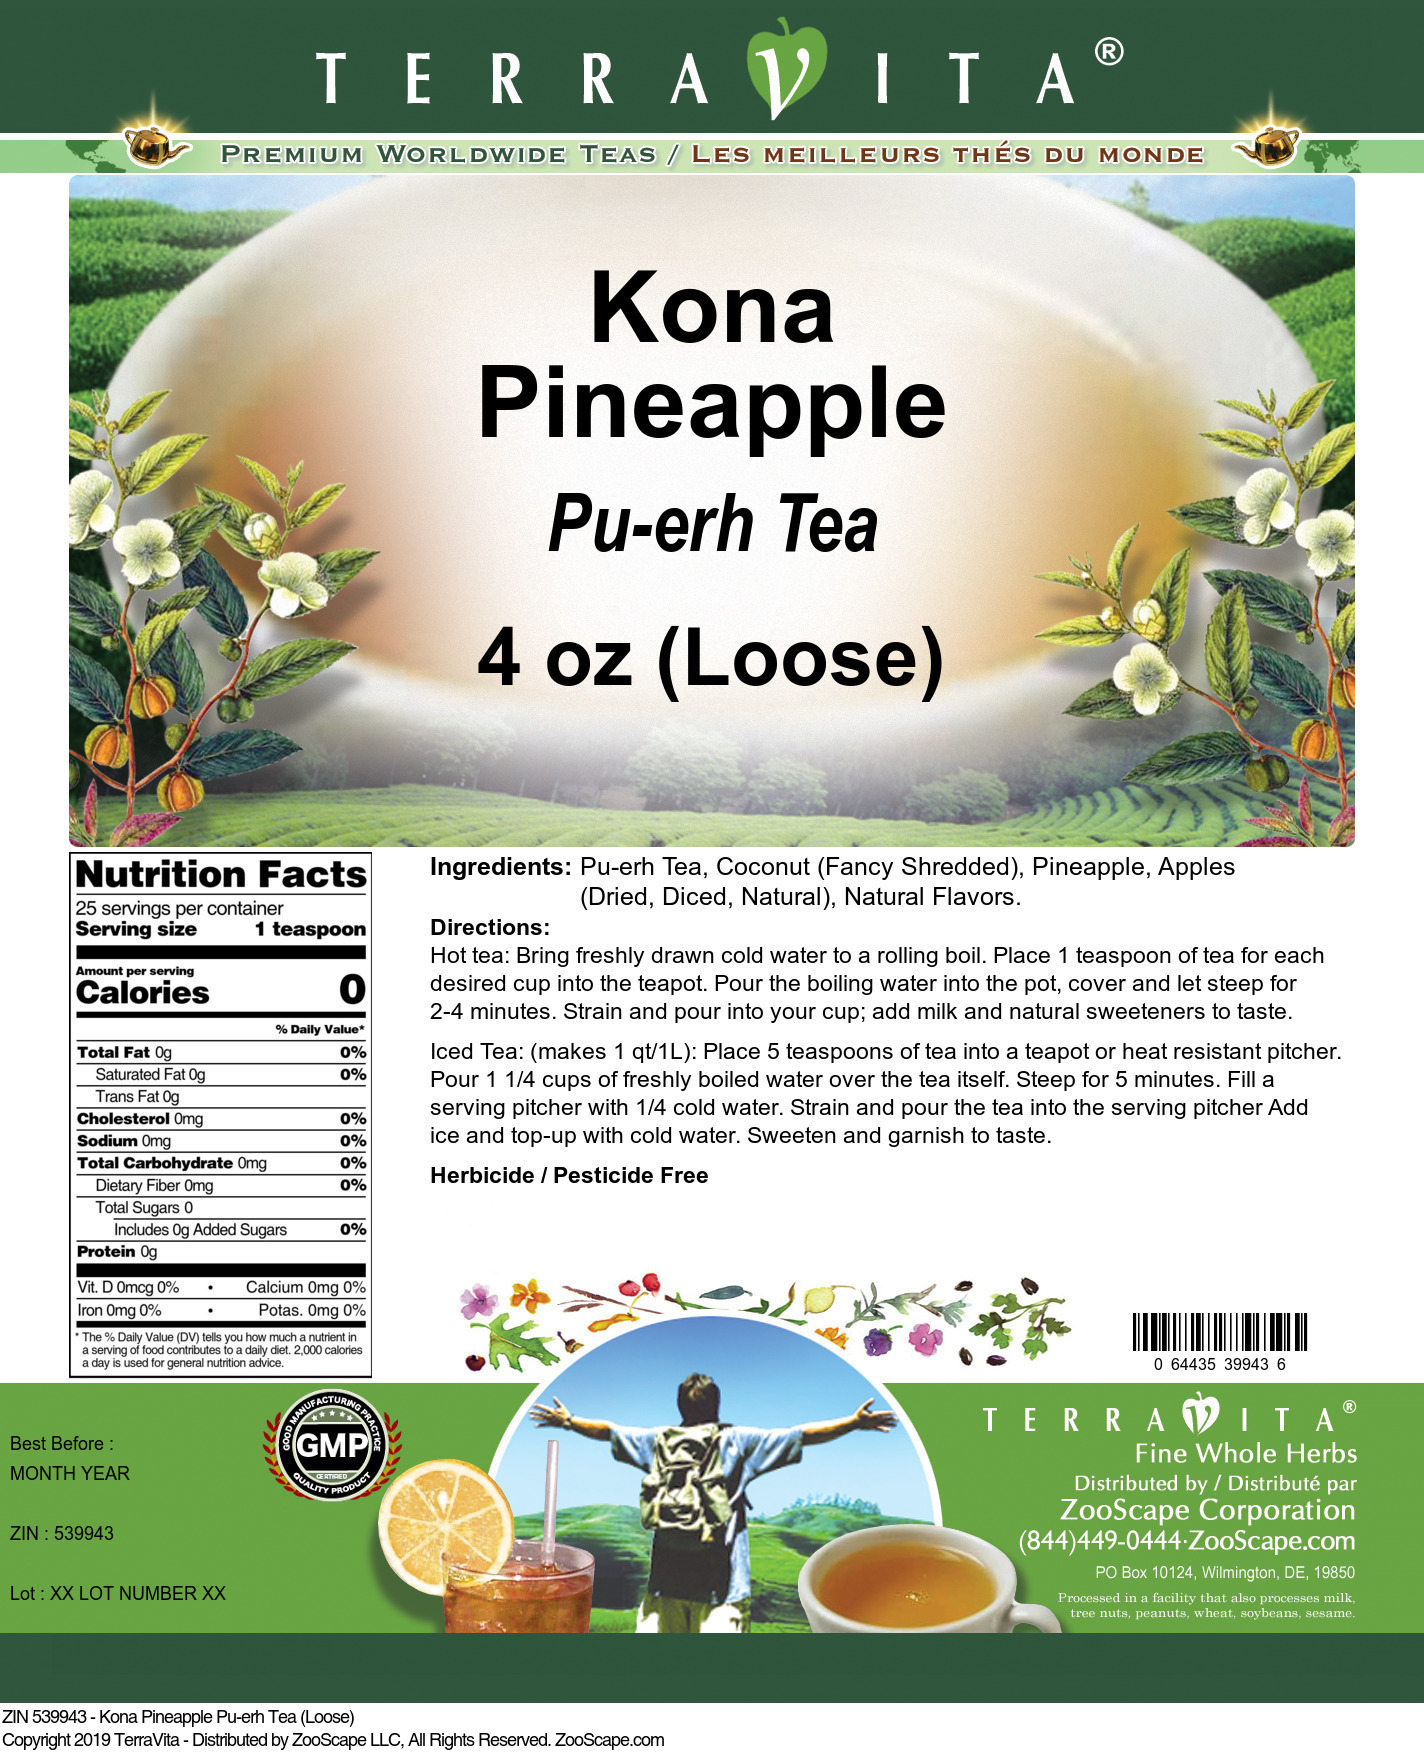 Kona Pineapple Pu-erh Tea (Loose) - Label